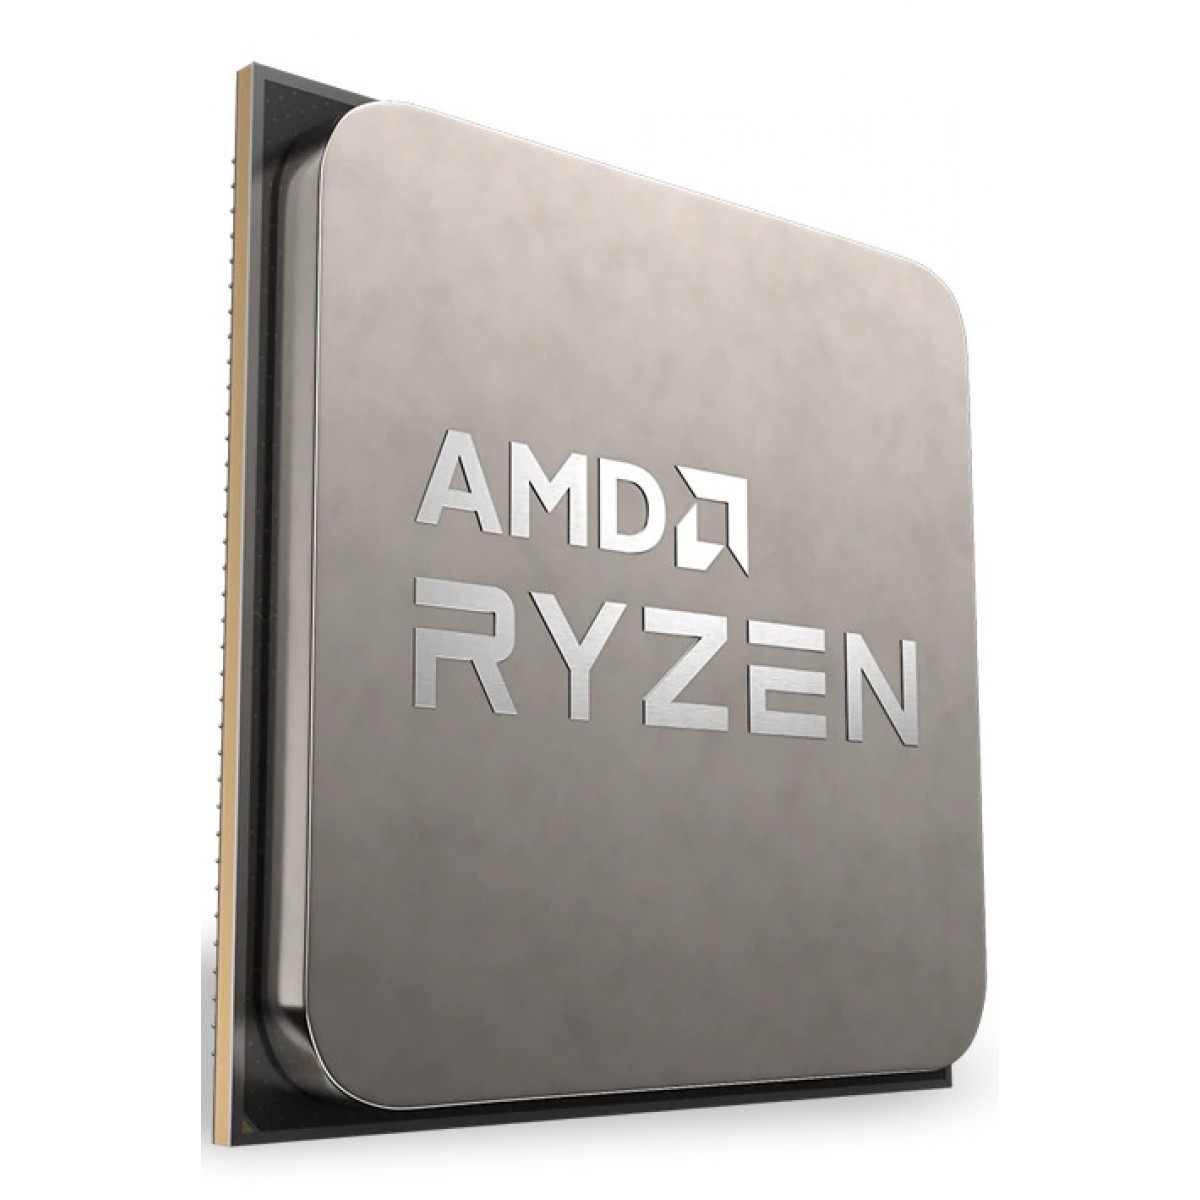 Processador AMD Ryzen 7 5700G 3.8GHz (4.6GHz Turbo), 8-Cores 16-Threads, Cooler Wraith Stealth, AM4, Com vídeo integrado, 100-100000263BOX